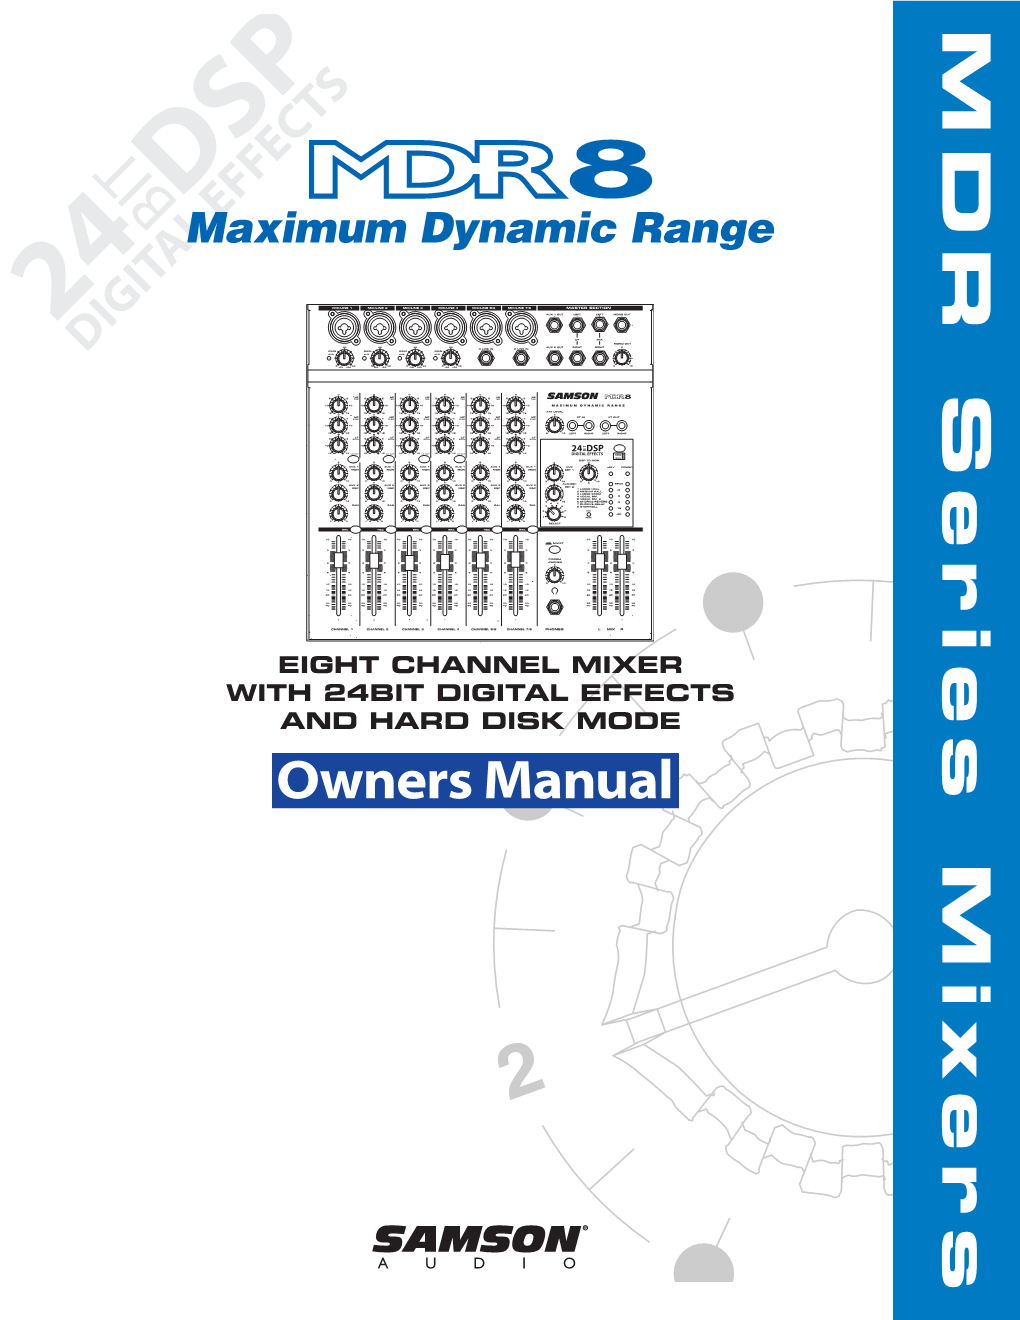 MDR8 User Manual (English)